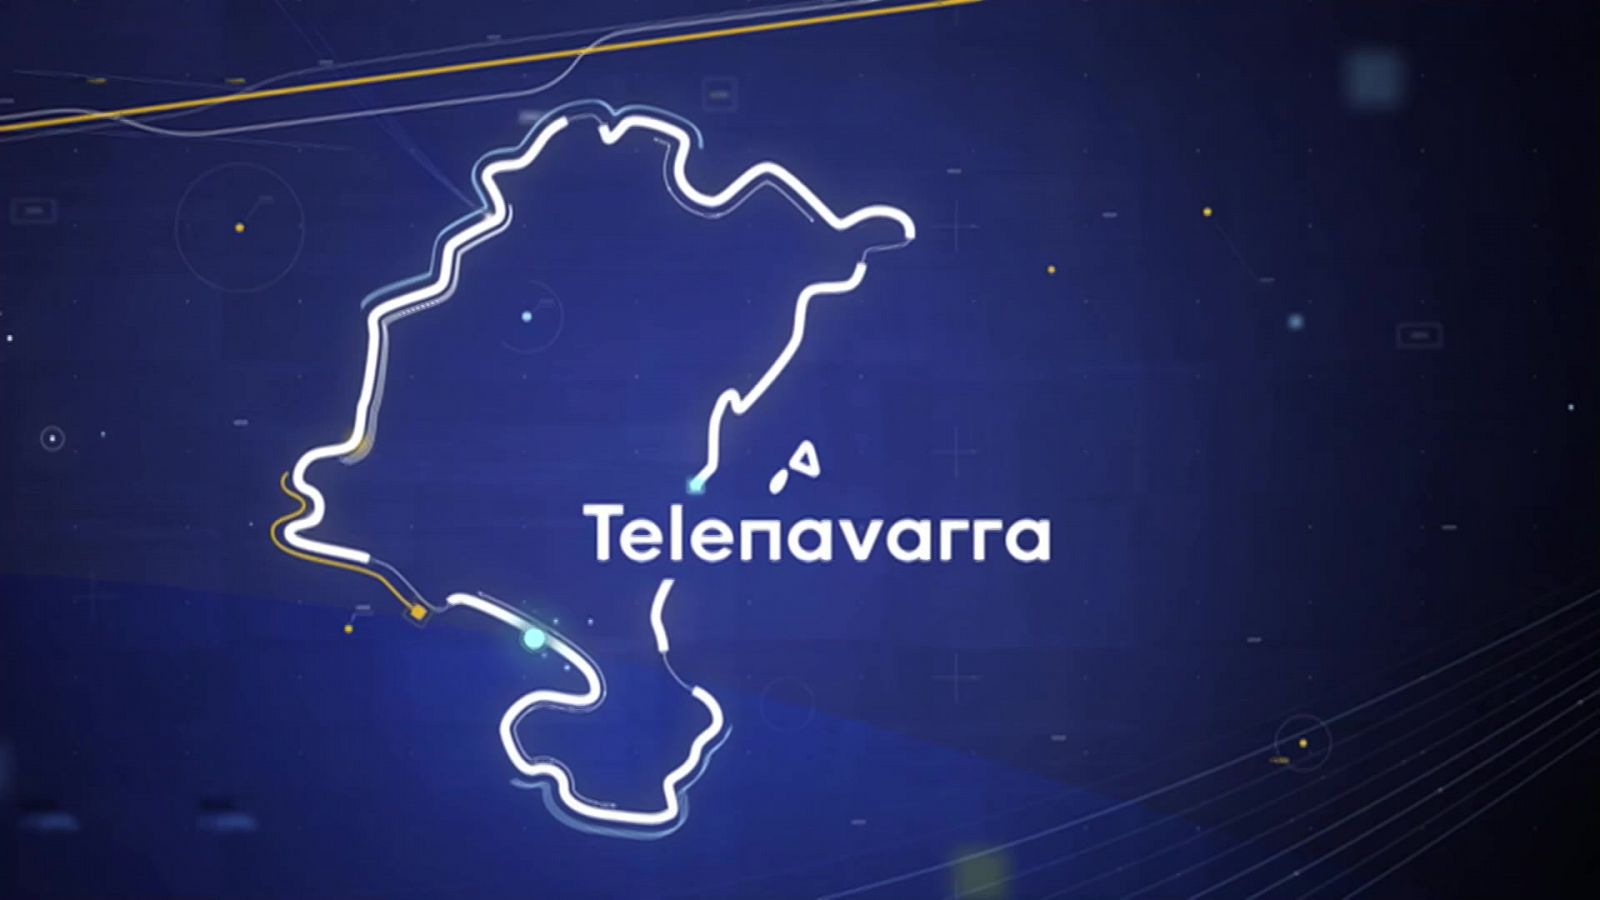 Telenavarra 2 - 28/4/2022 - RTVE.es